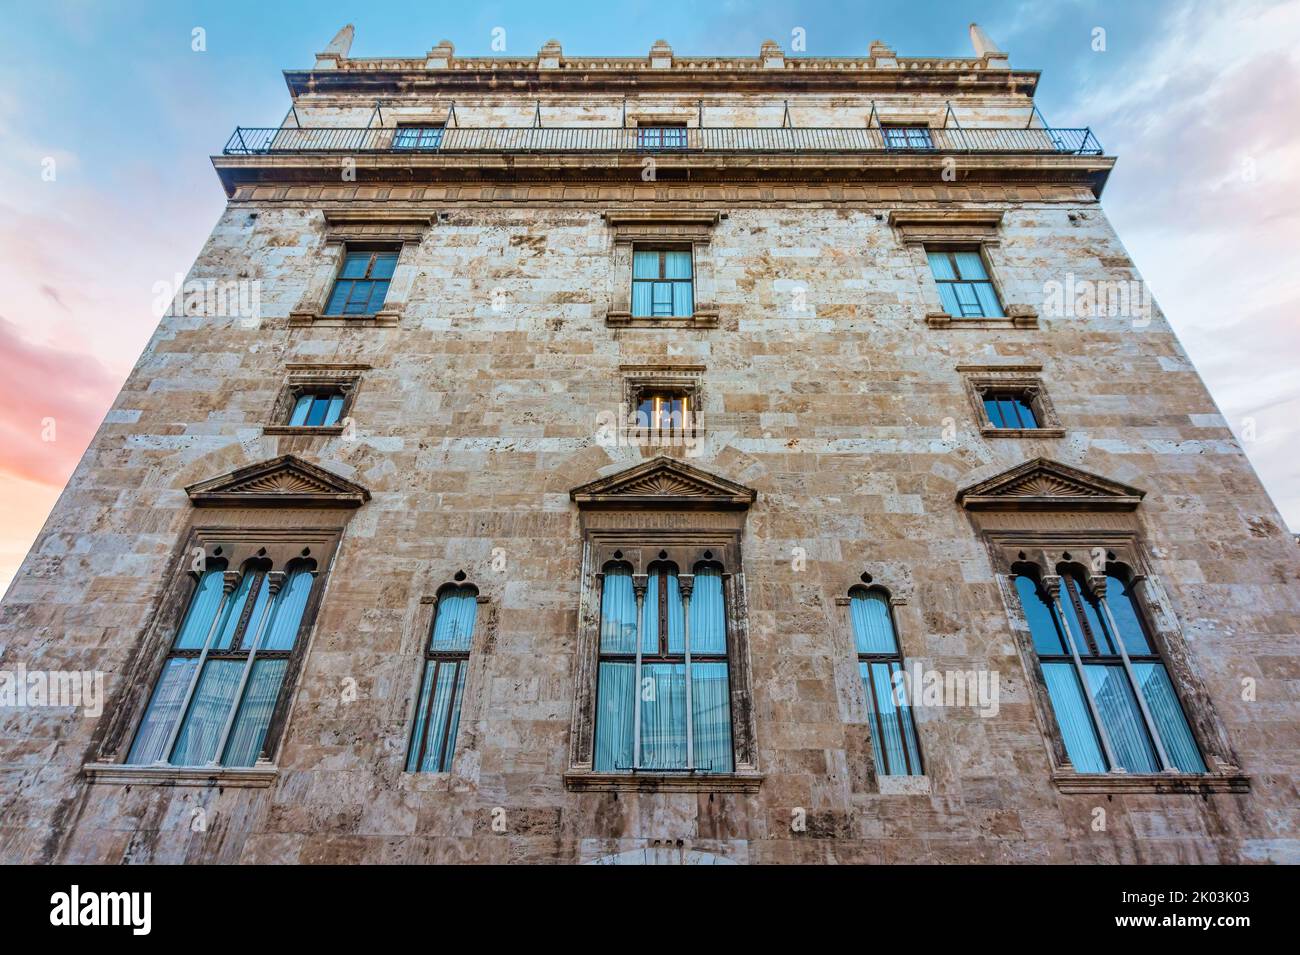 A medieval building occupied by the Palau de la Generalitat Valenciana, Spain Stock Photo